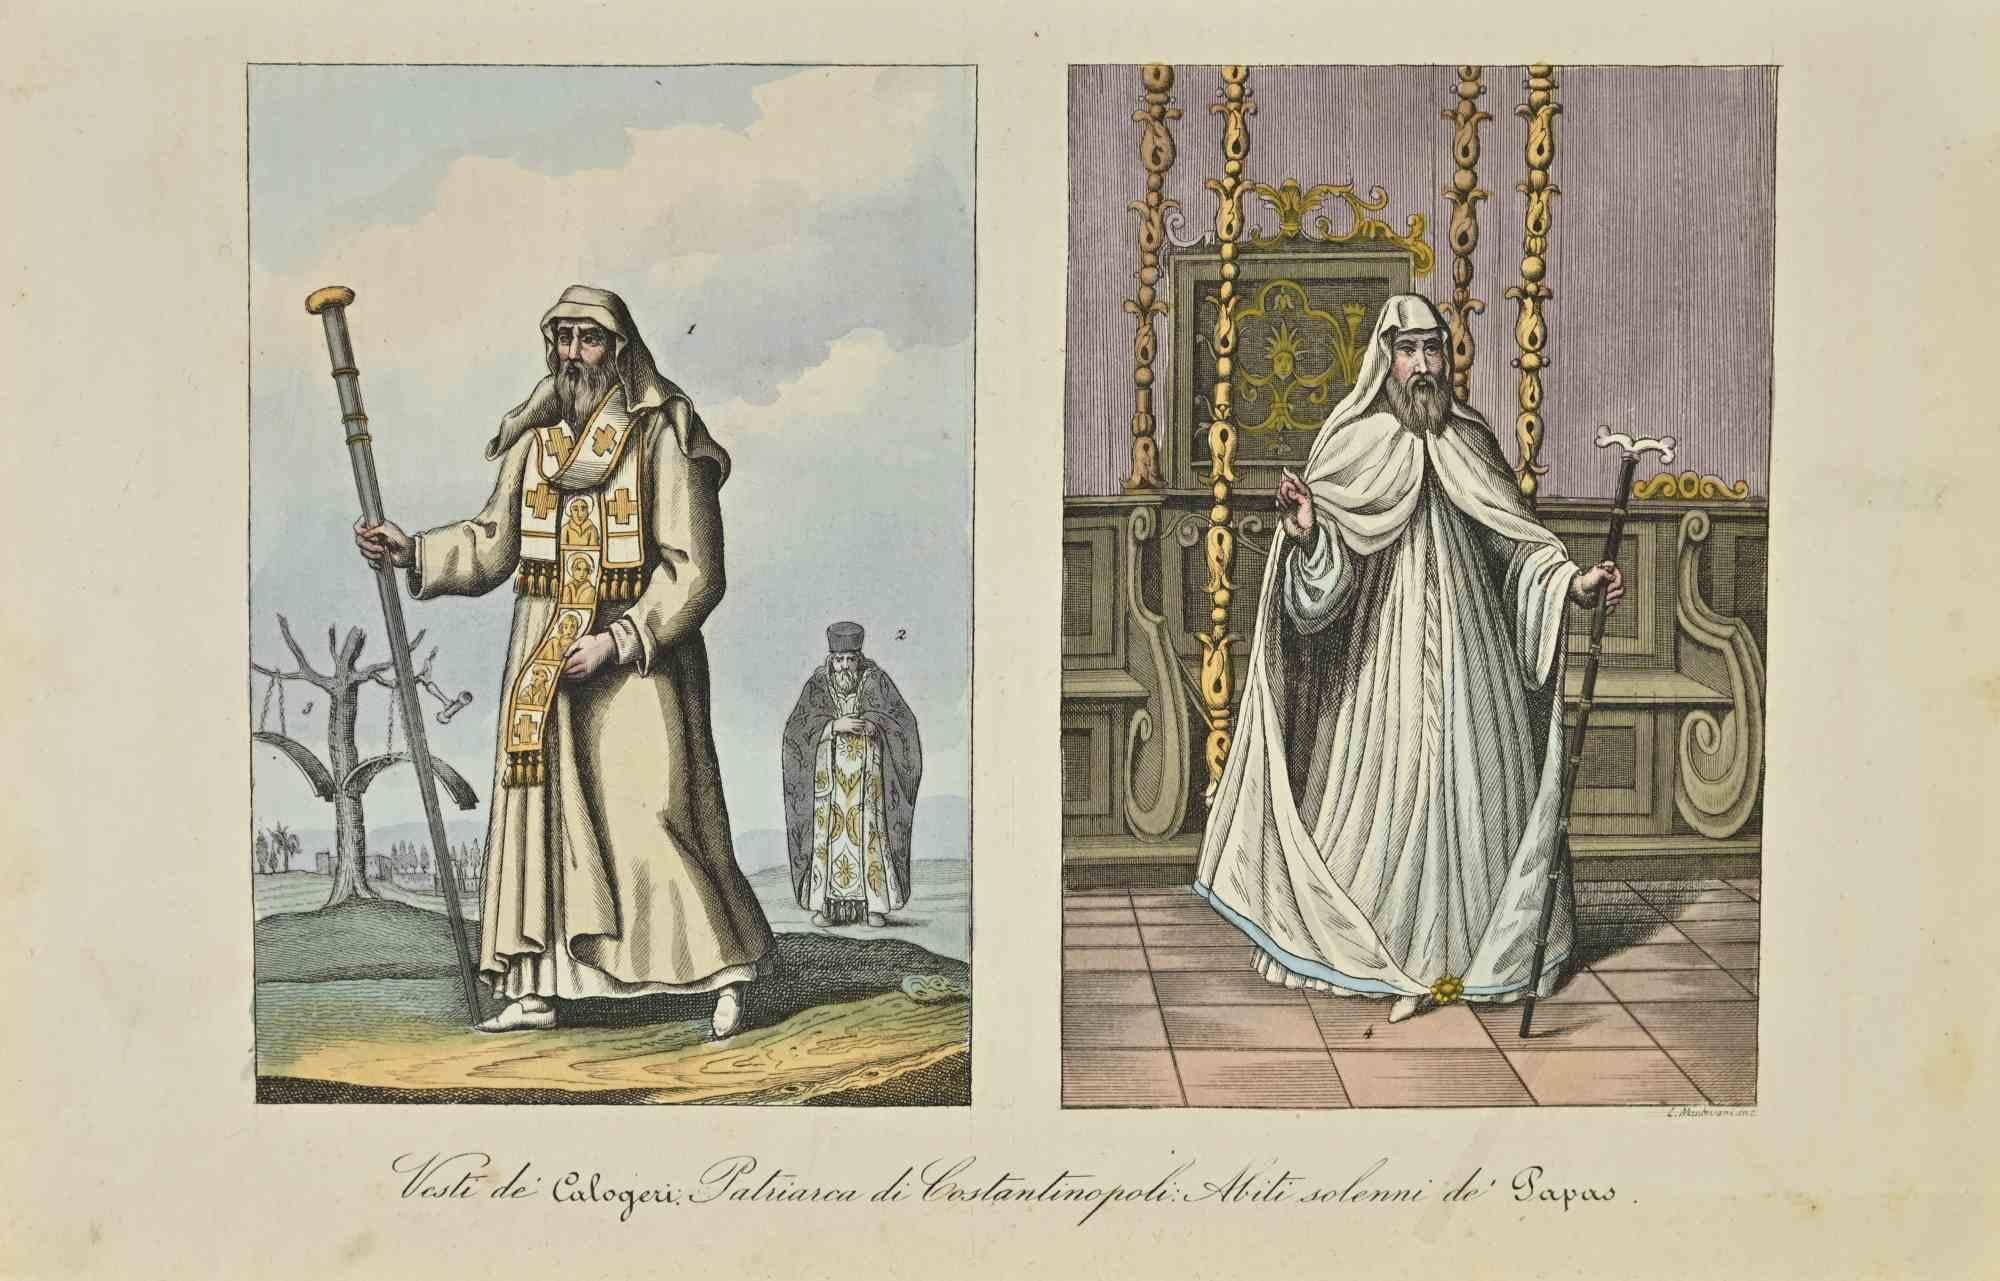 Cologeri's Robes - Lithograph - 1862